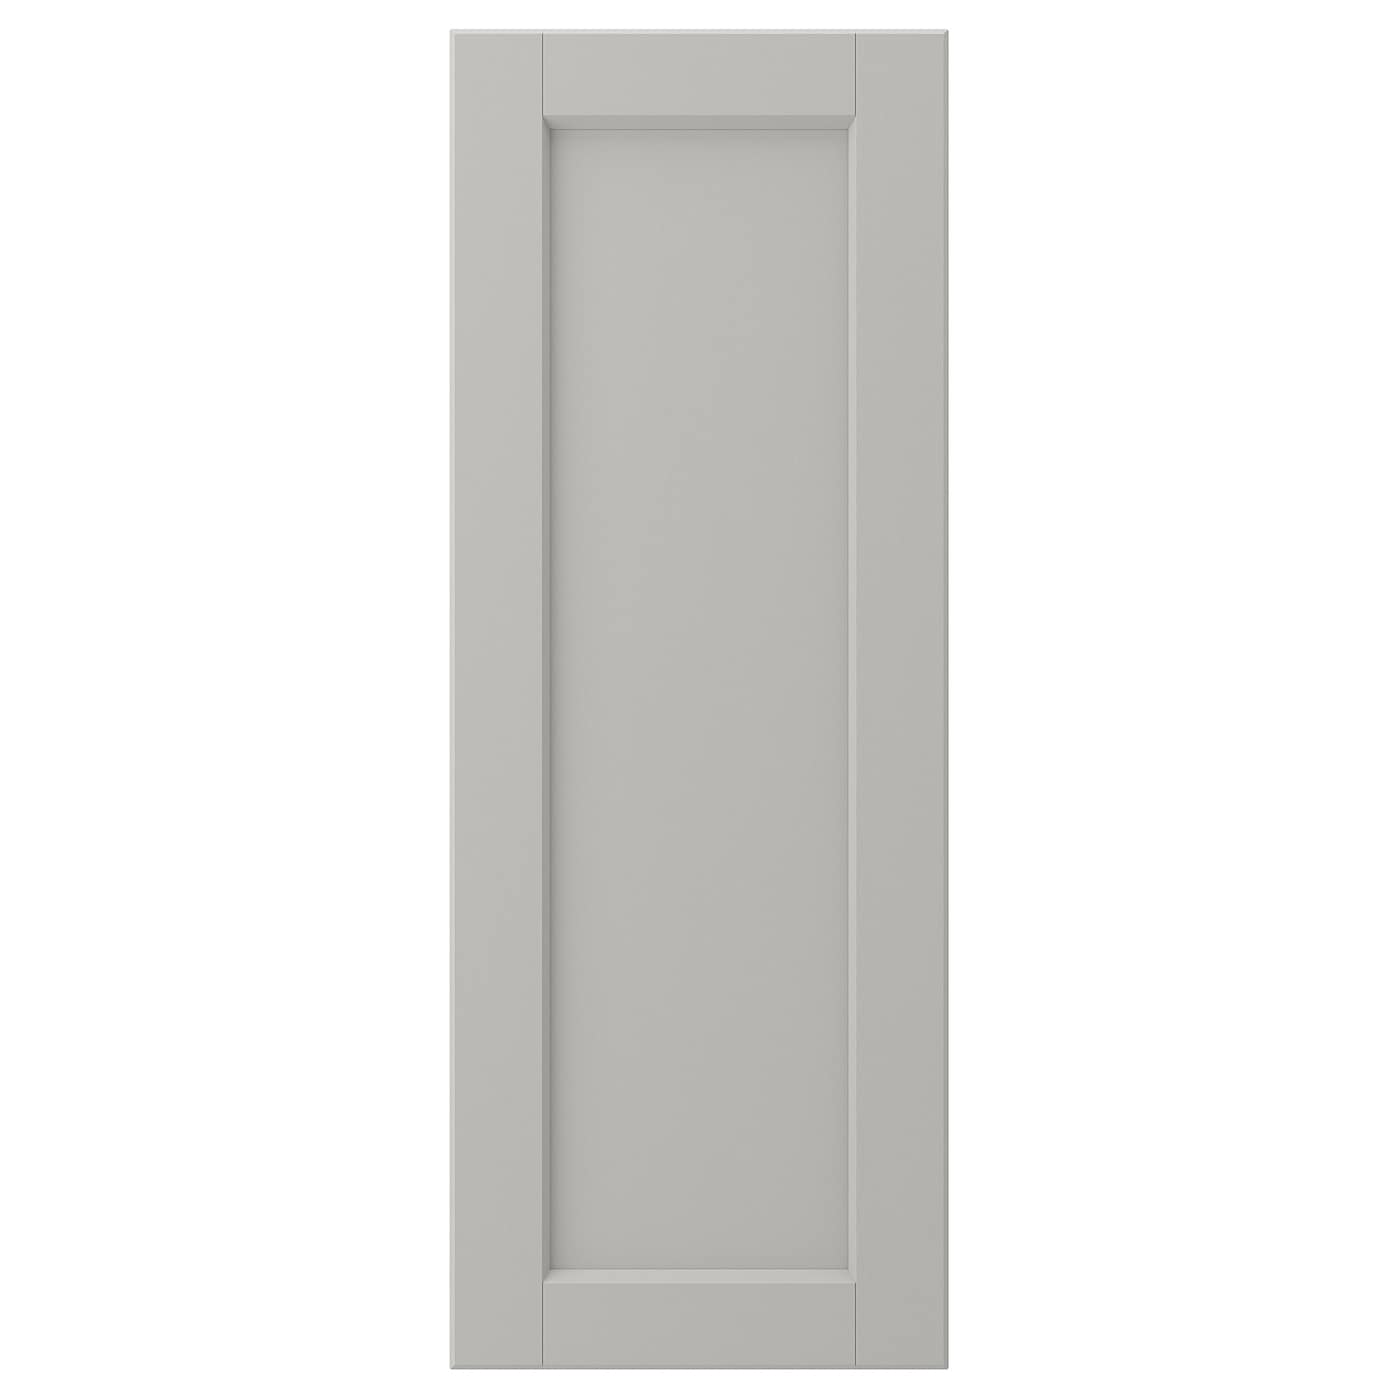 Фасад - IKEA LERHYTTAN, 80х30 см, светло-серый, ЛЕРХЮТТАН ИКЕА